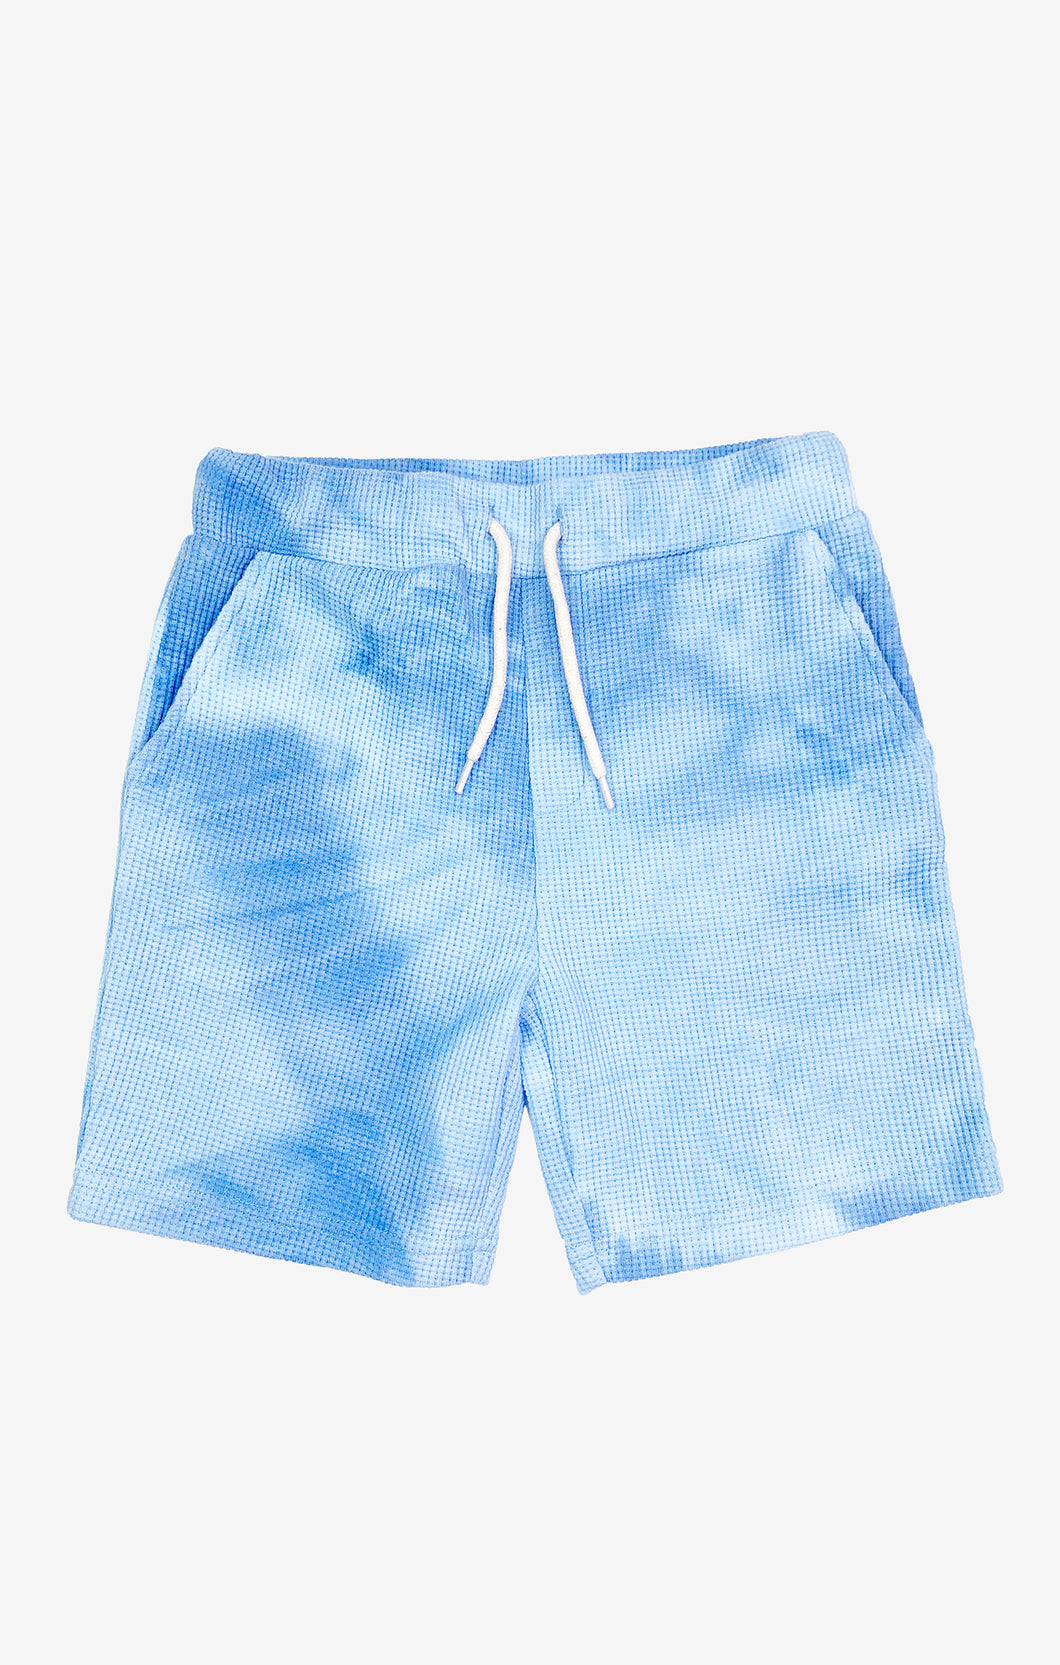 Resort Shorts - Blue Tie Dye